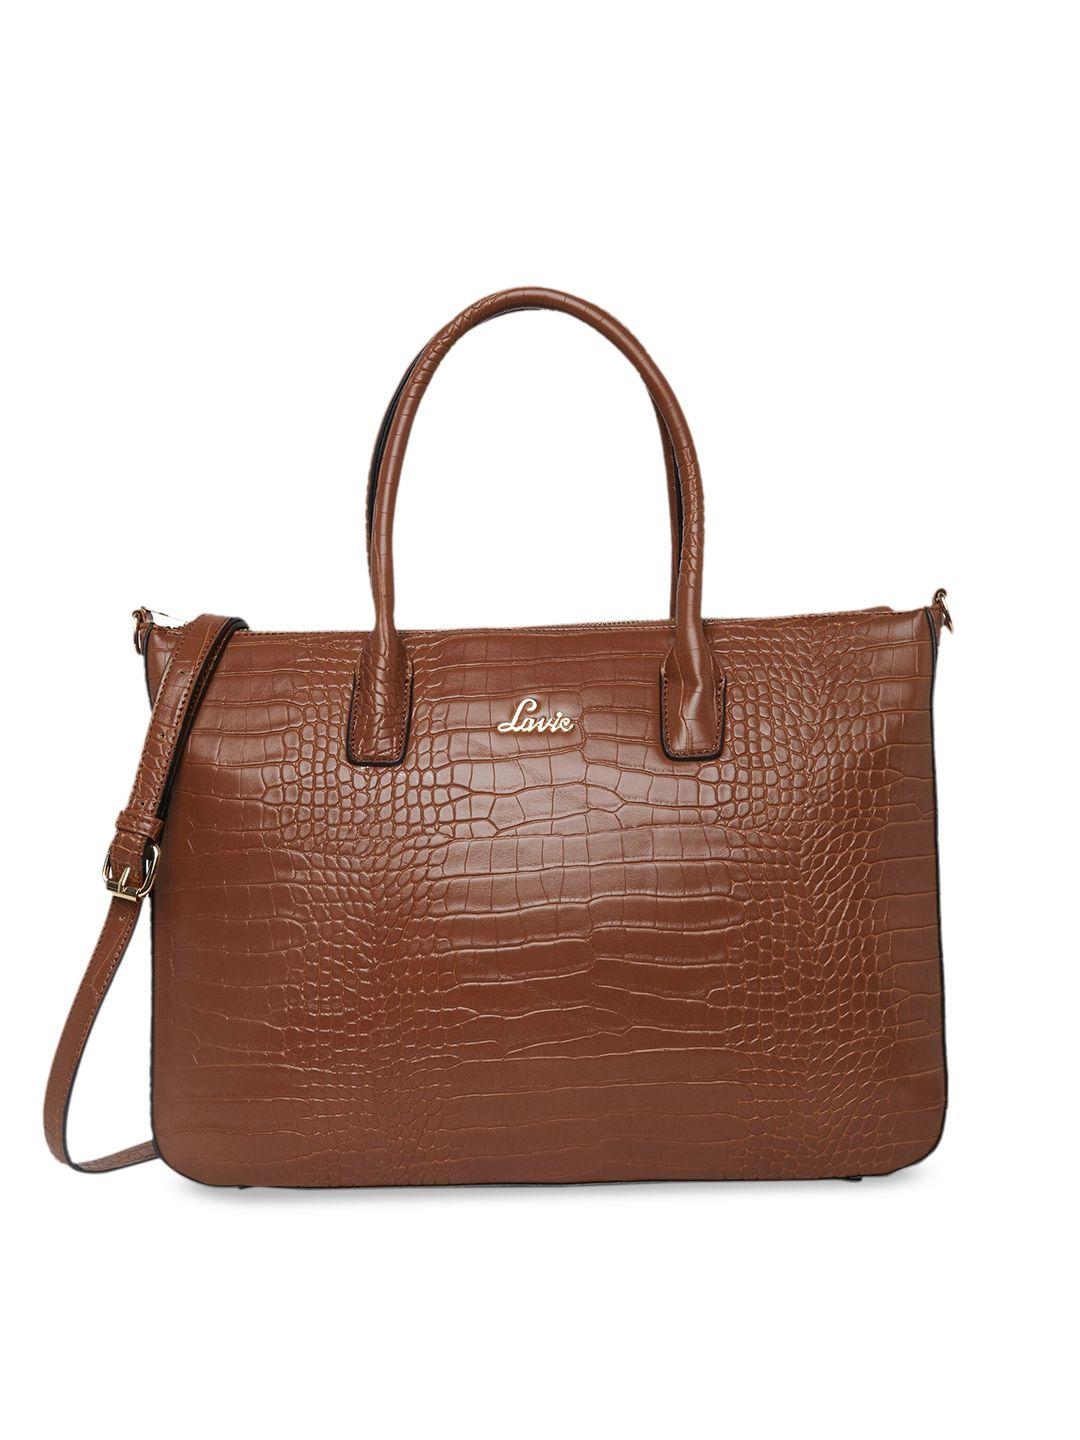 lavie brown animal textured shopper tote bag